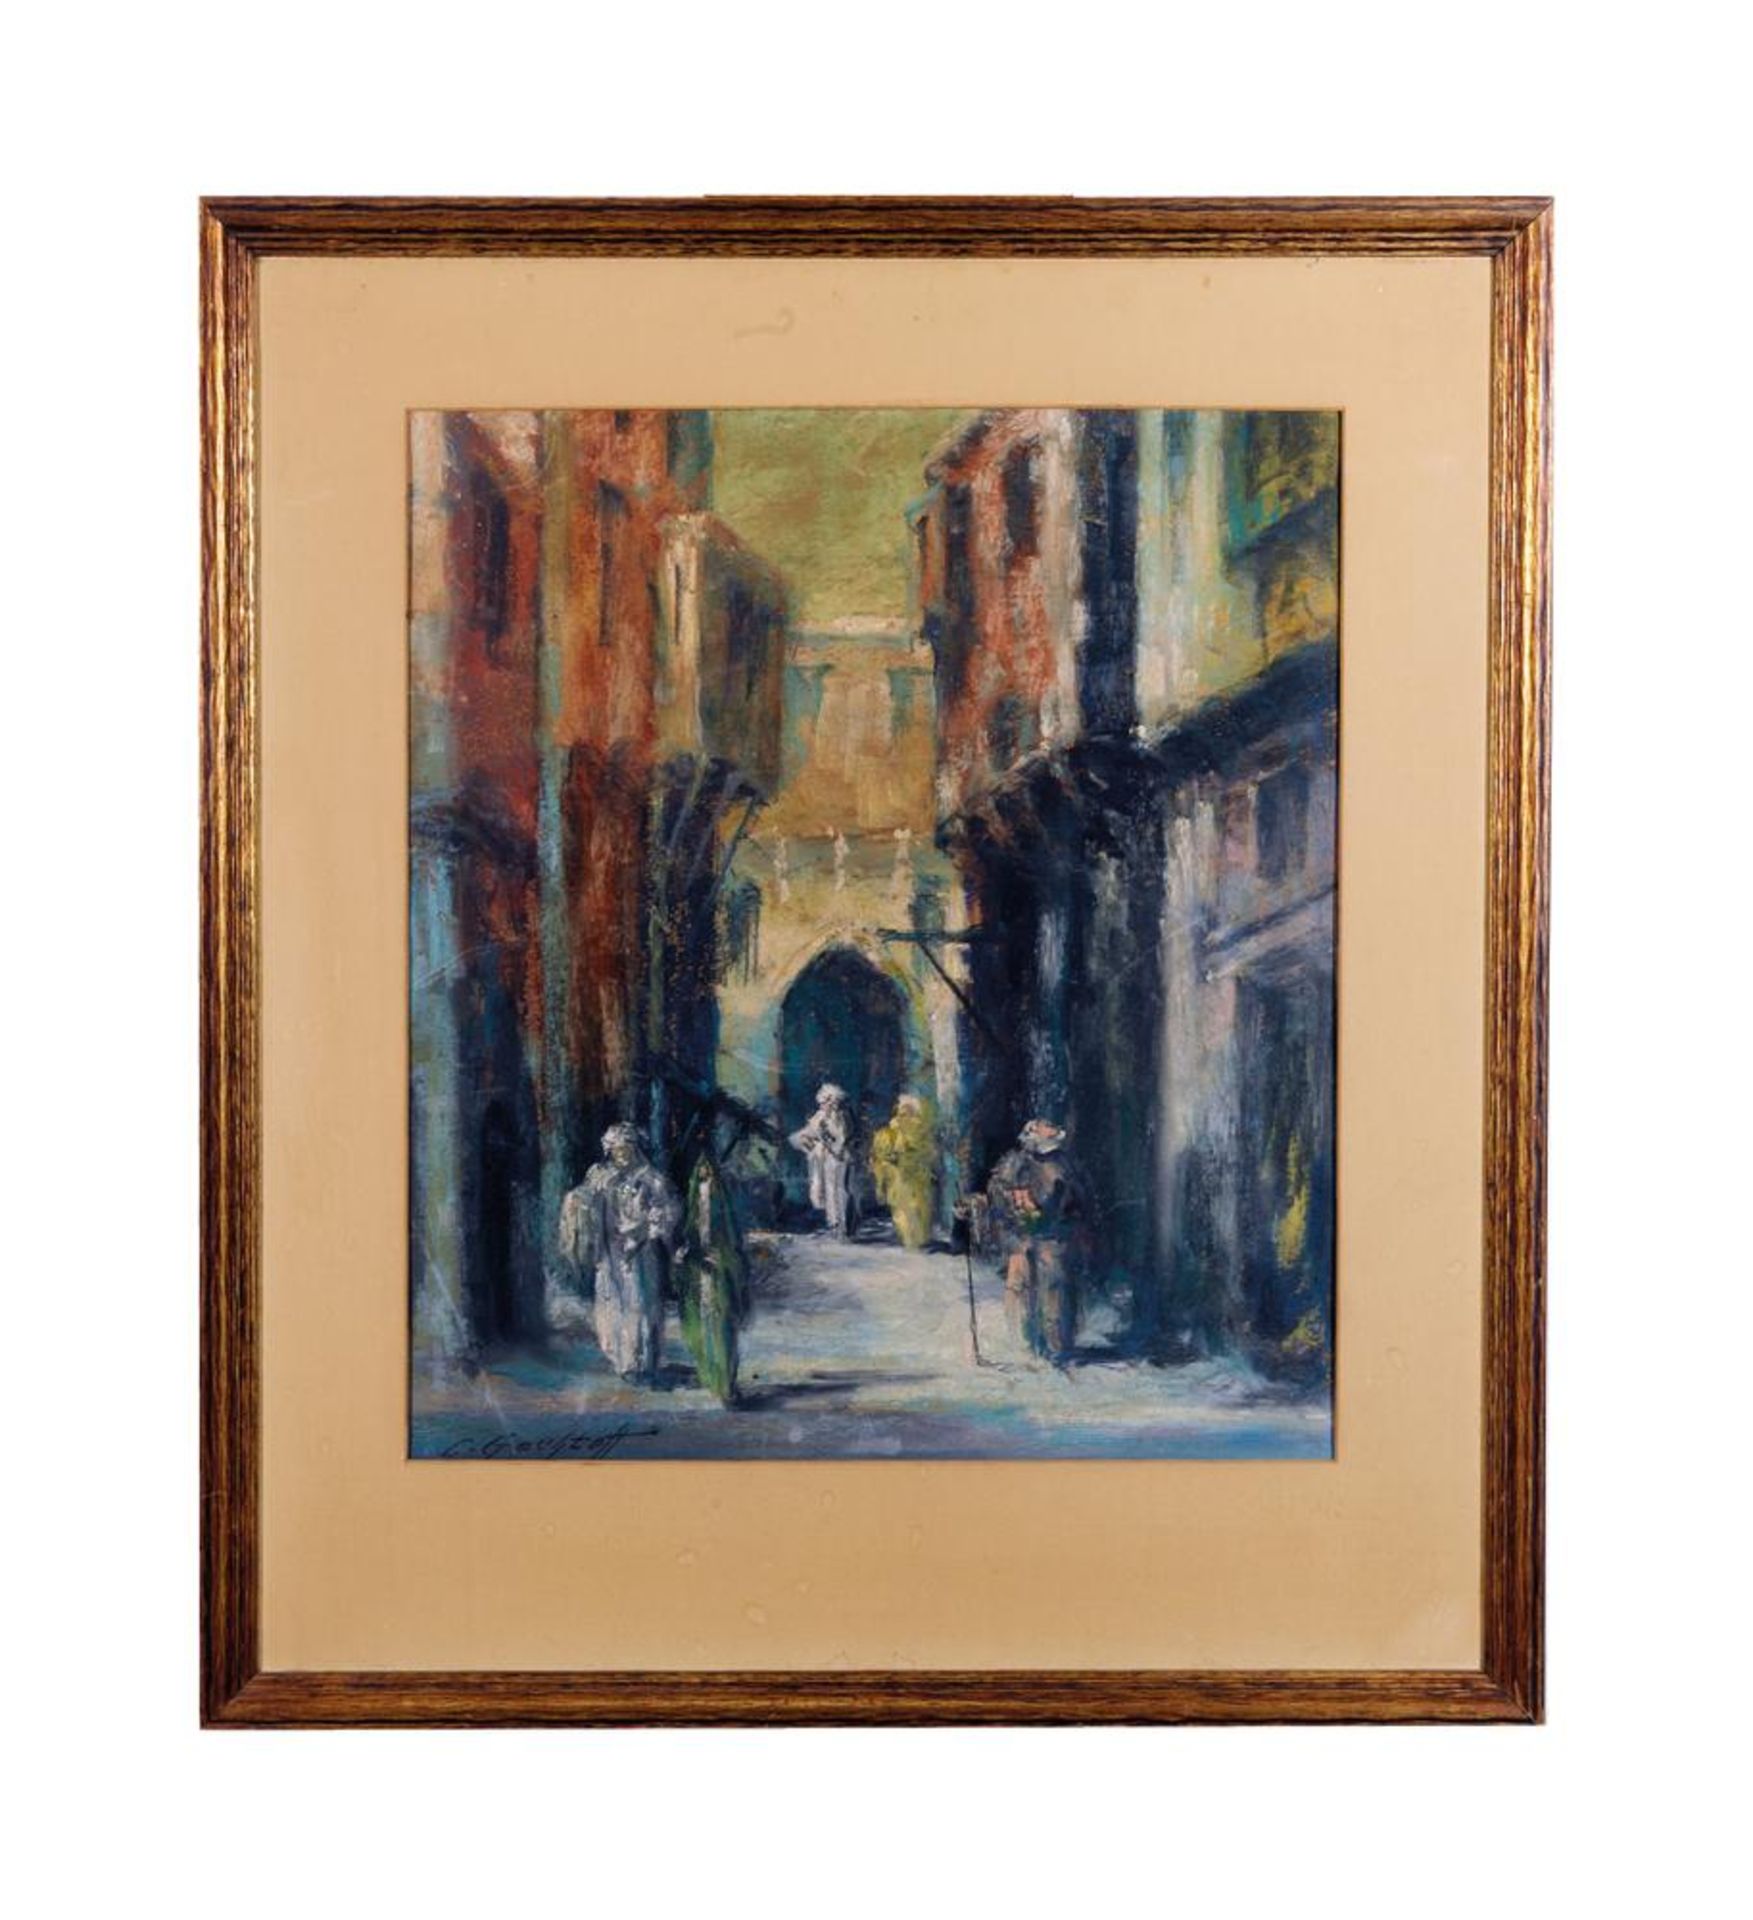 LEONID GECHTOFF (1883-1941) - Cairo Street Scene Signed ‘L Gechtoff’ (lower [...] - Image 2 of 2